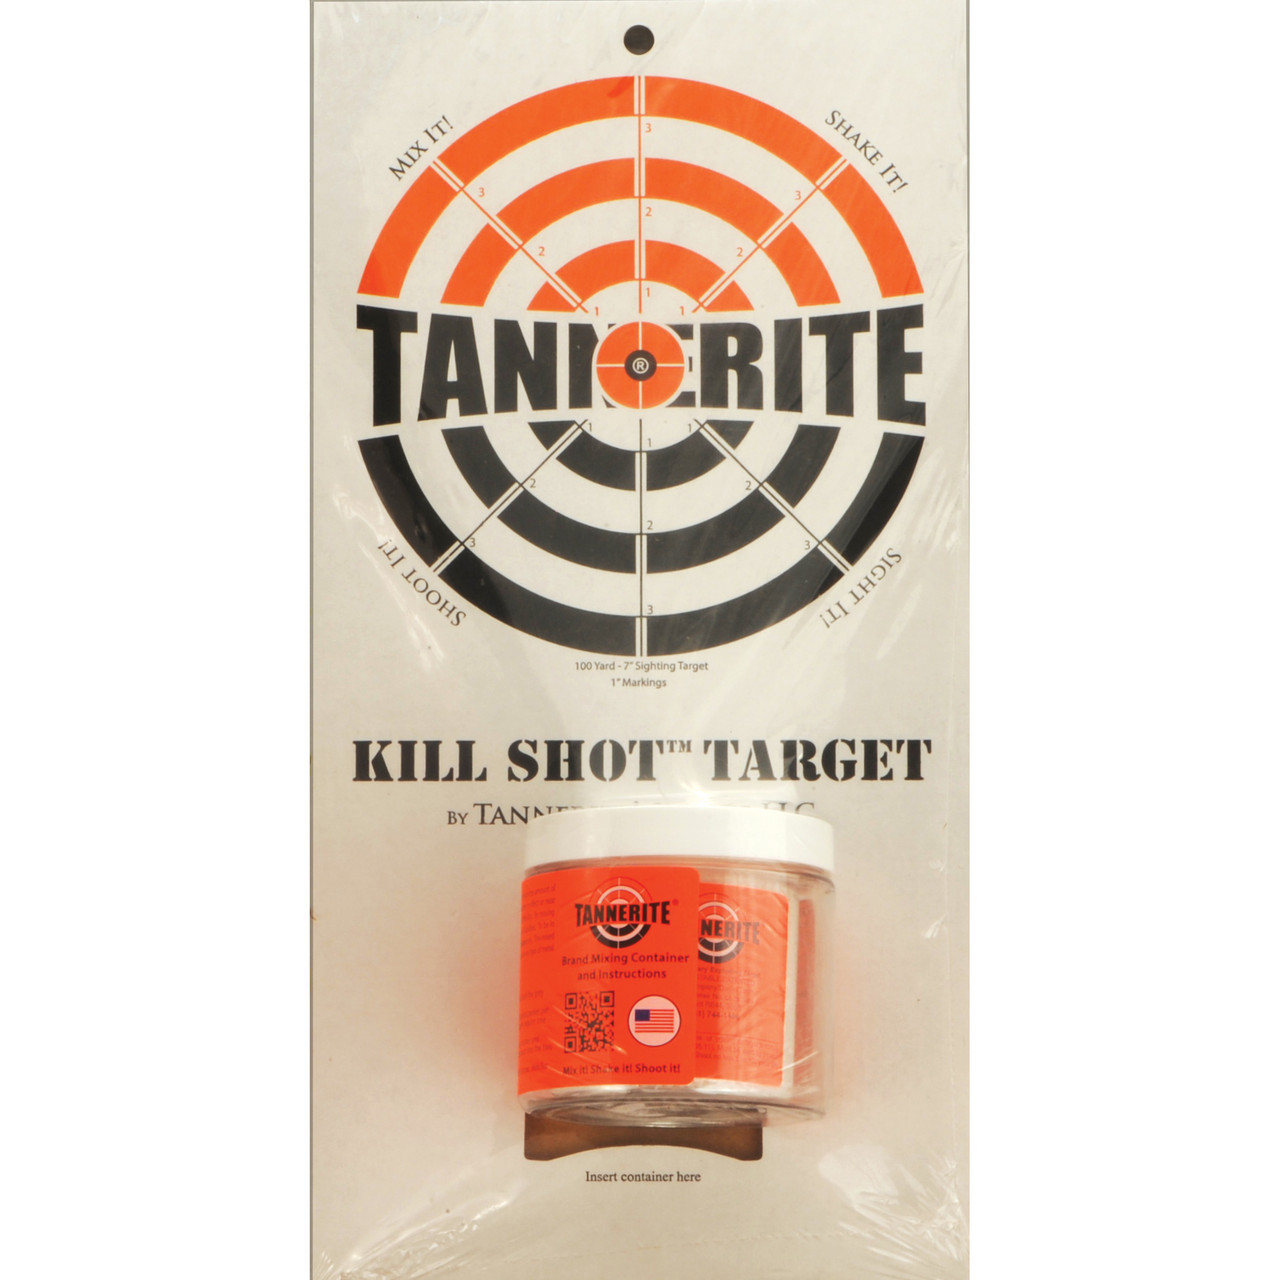 Tannerite Exploding Rifle Target 1 lb Target